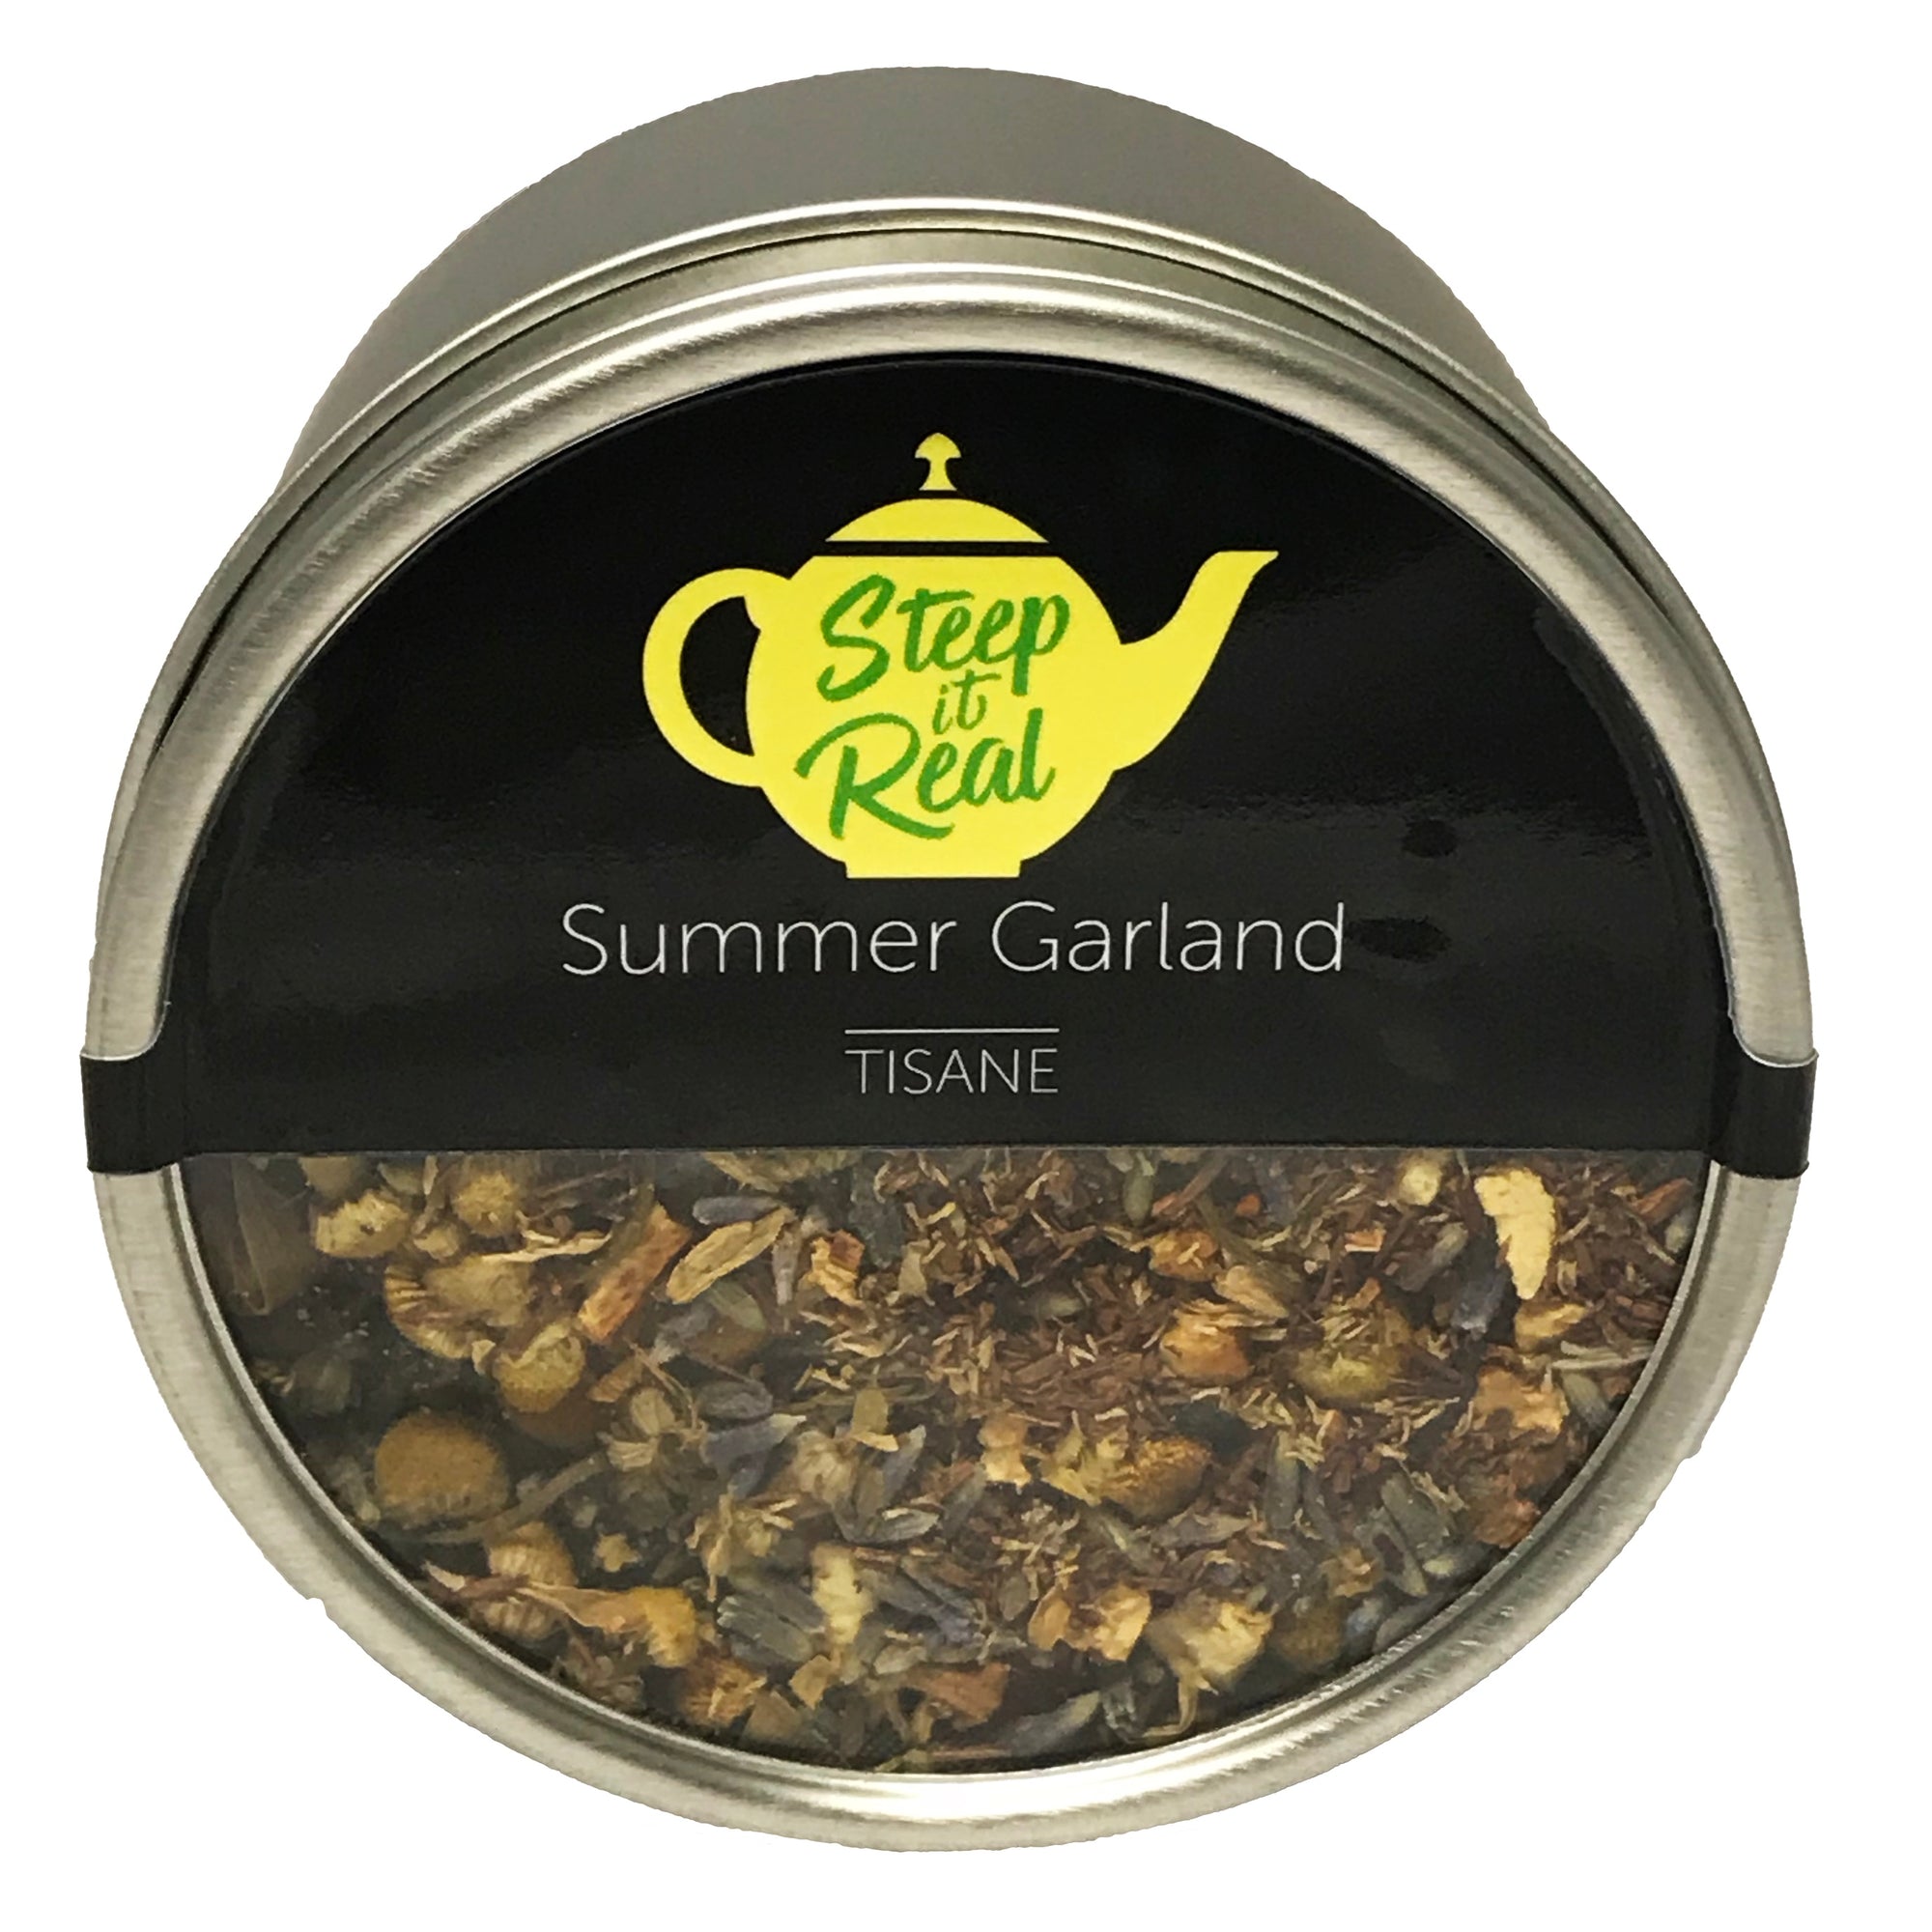 Summer Garland - I Have a Bean